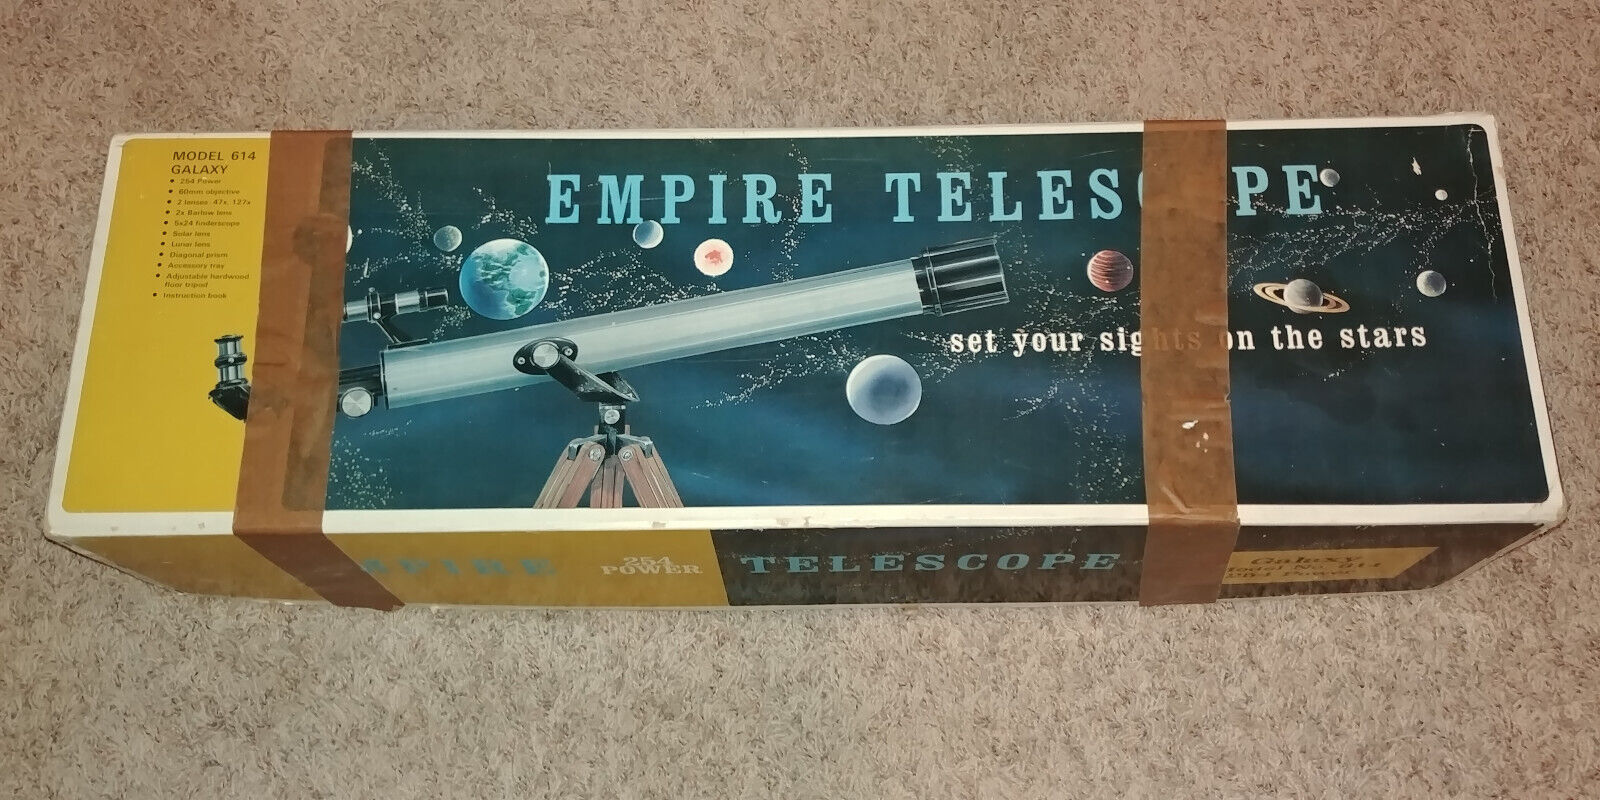 VINTAGE Empire Telescope model 614 Galaxy 254 Power wooden tripod & original box